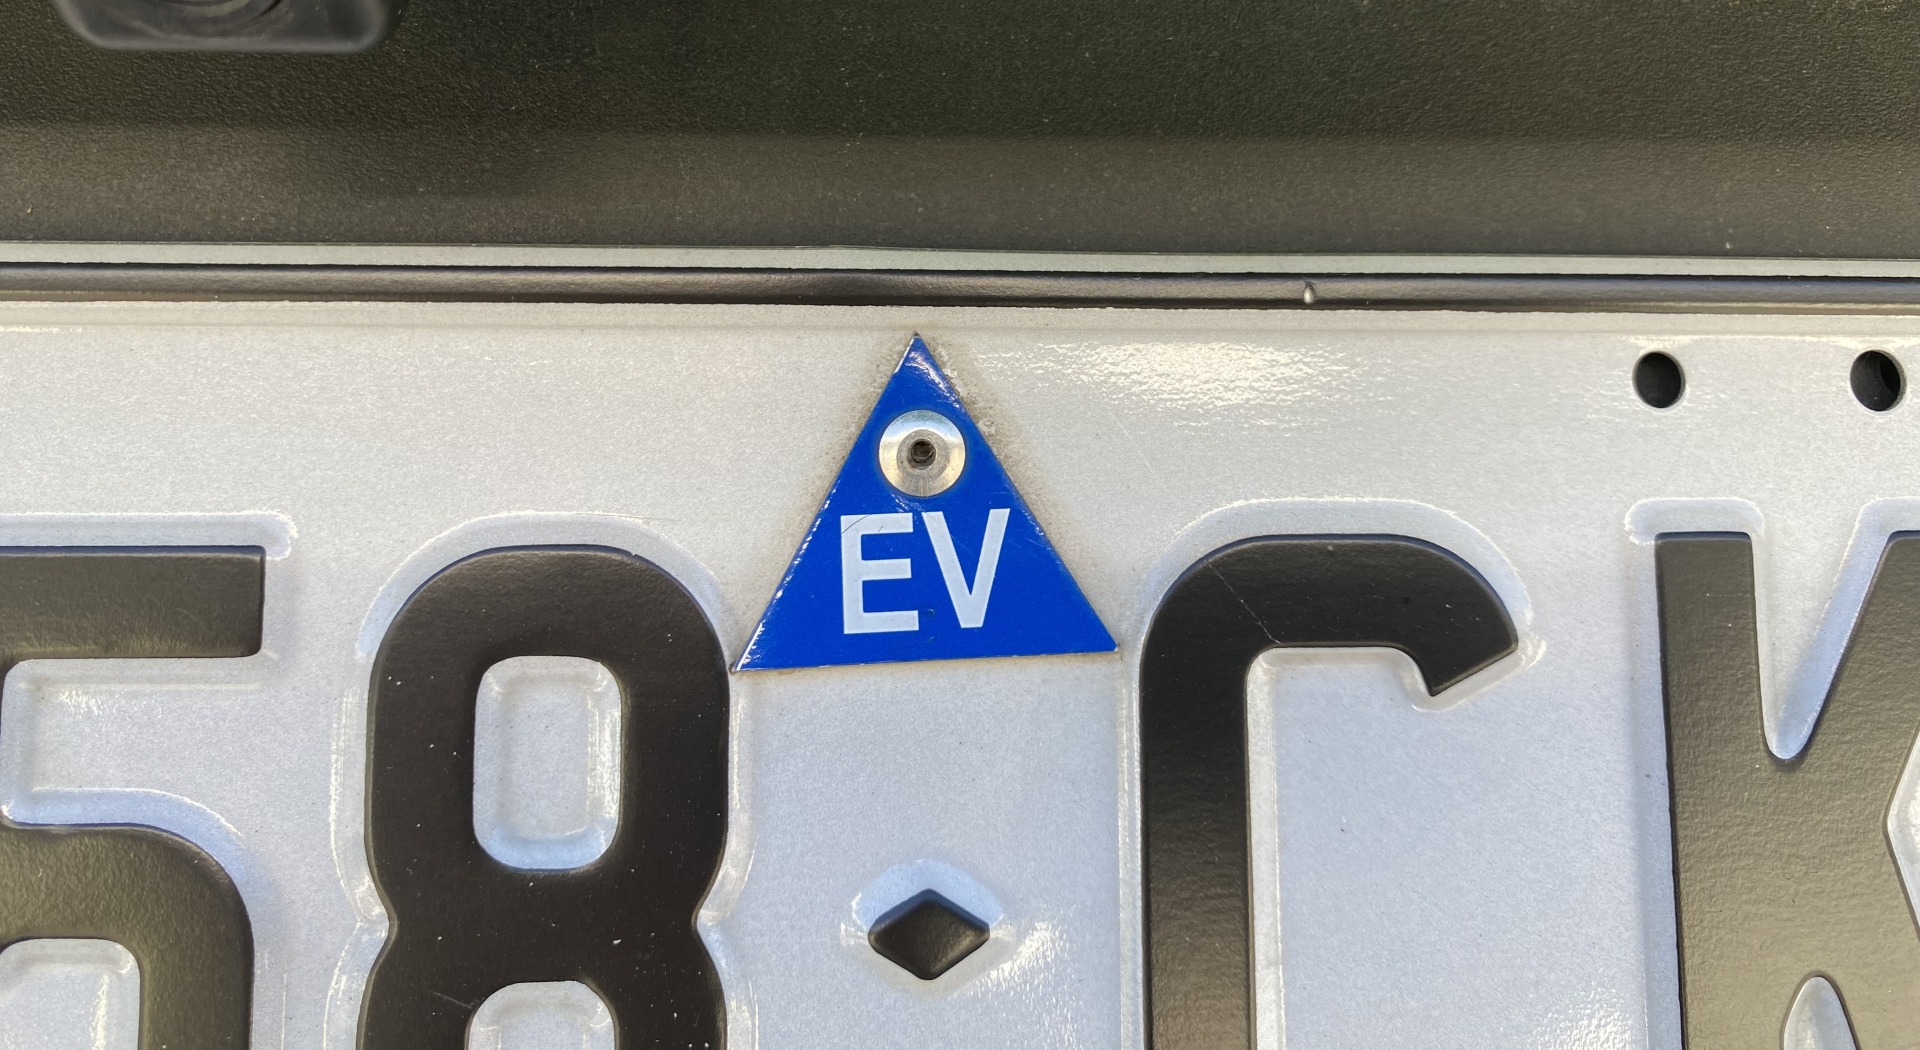 EV tag on number plate